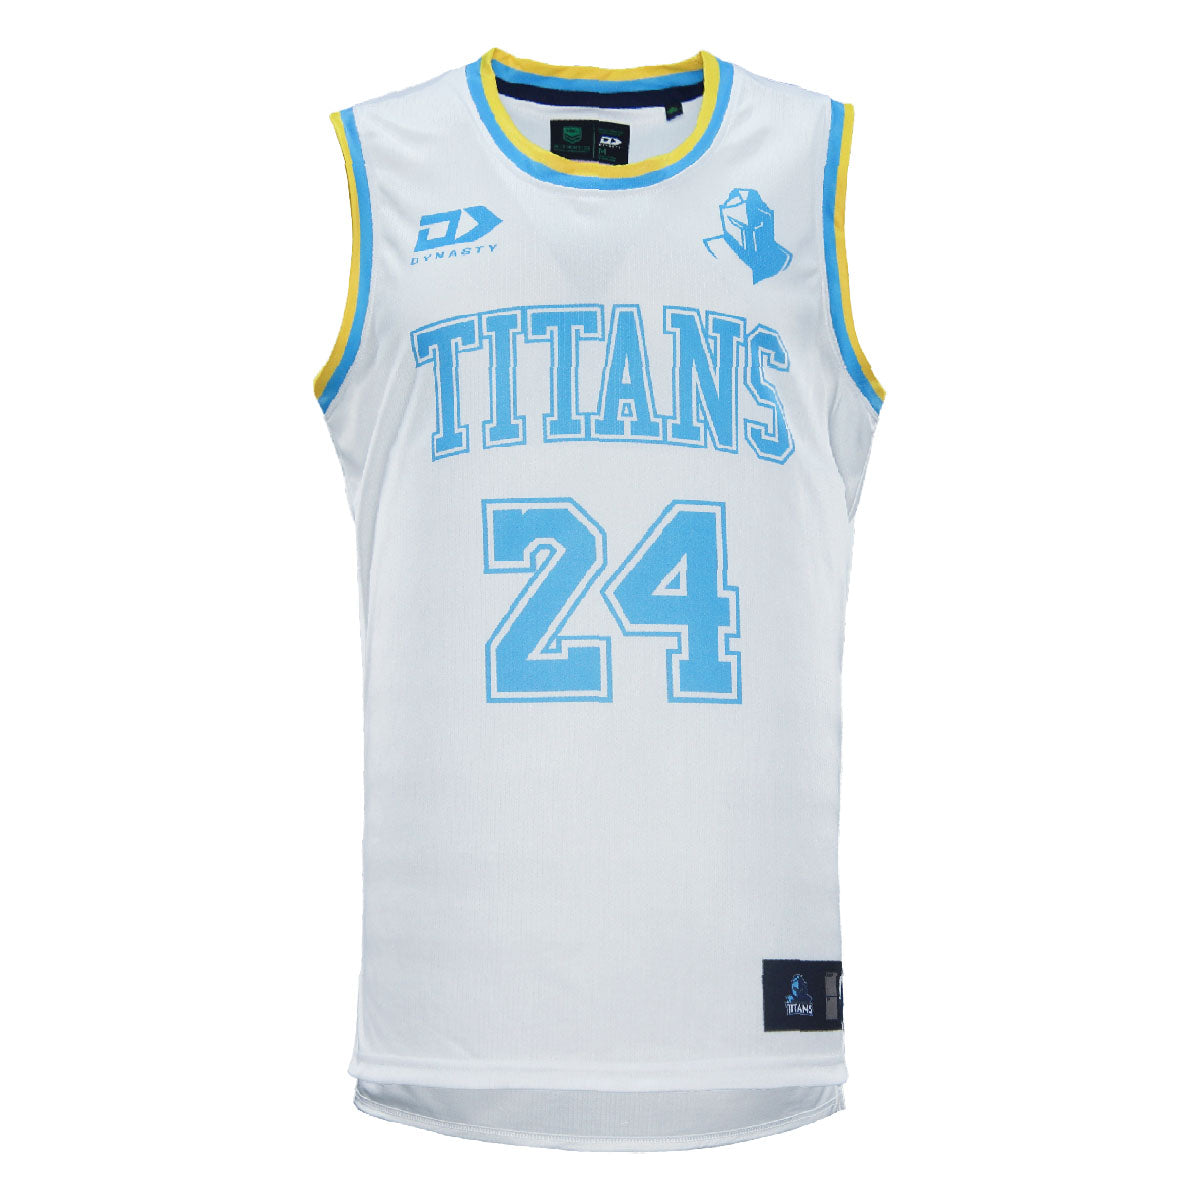 2024 Gold Coast Titans Mens White Basketball Singlet-FRONT